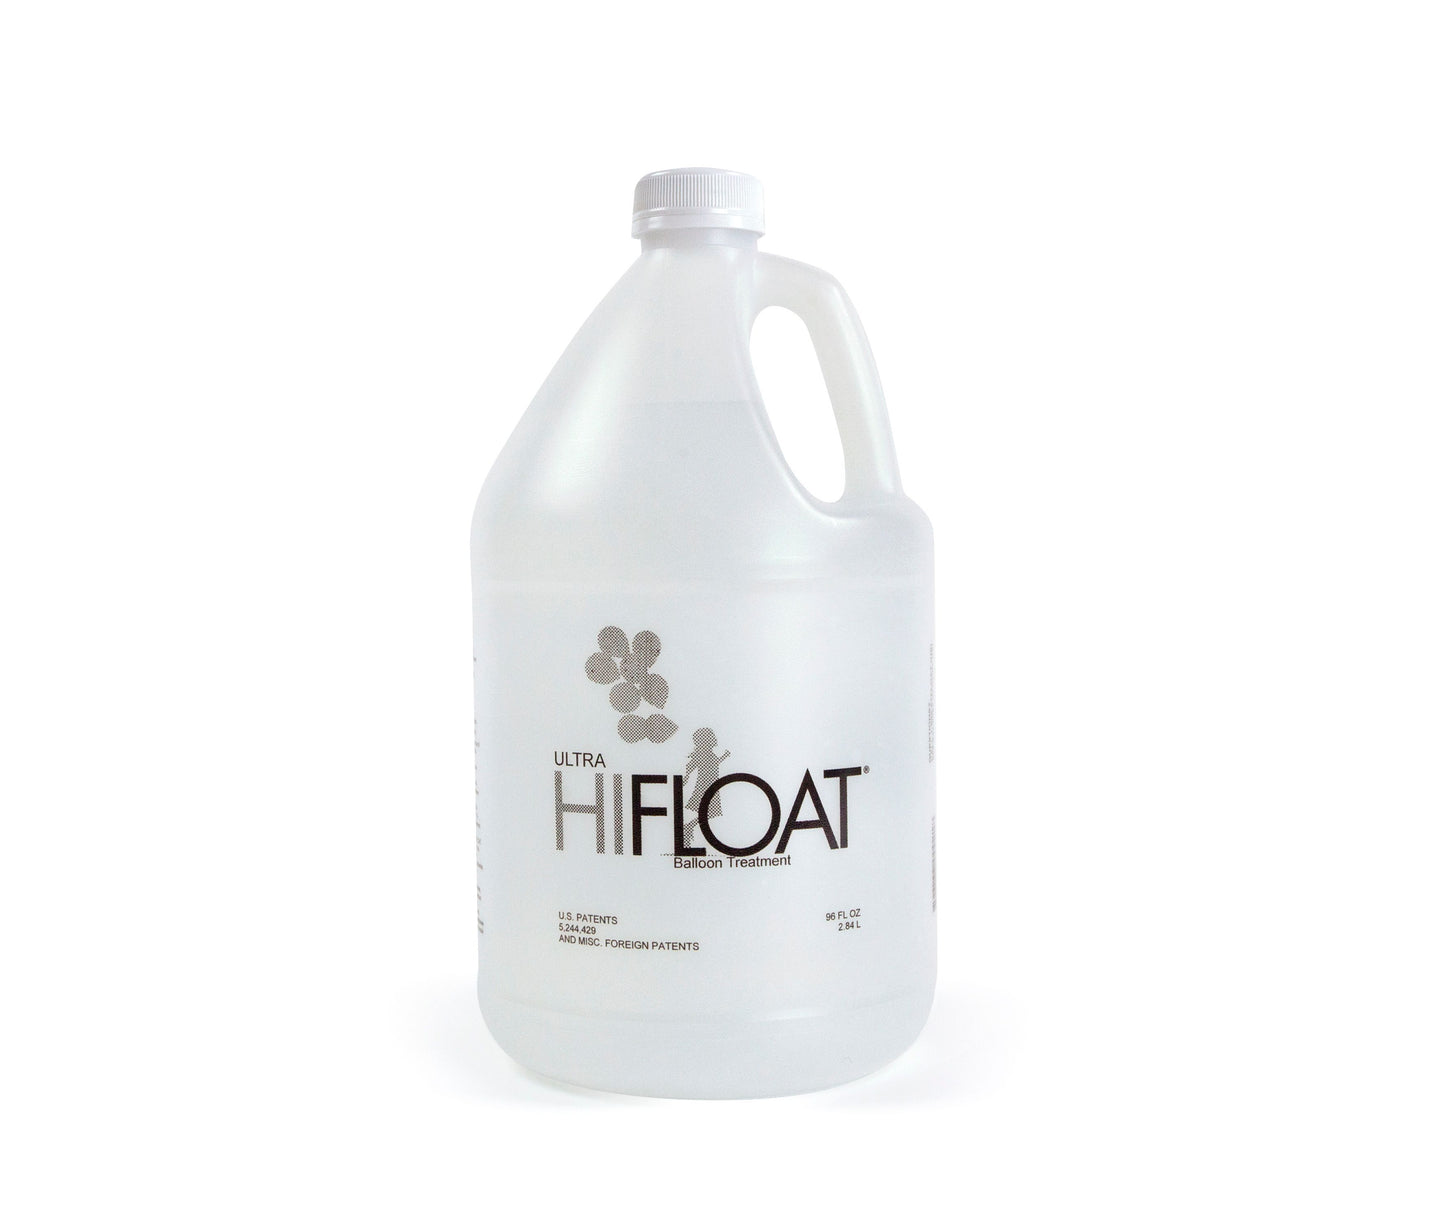 96oz HiFloat with pump dispenser kit